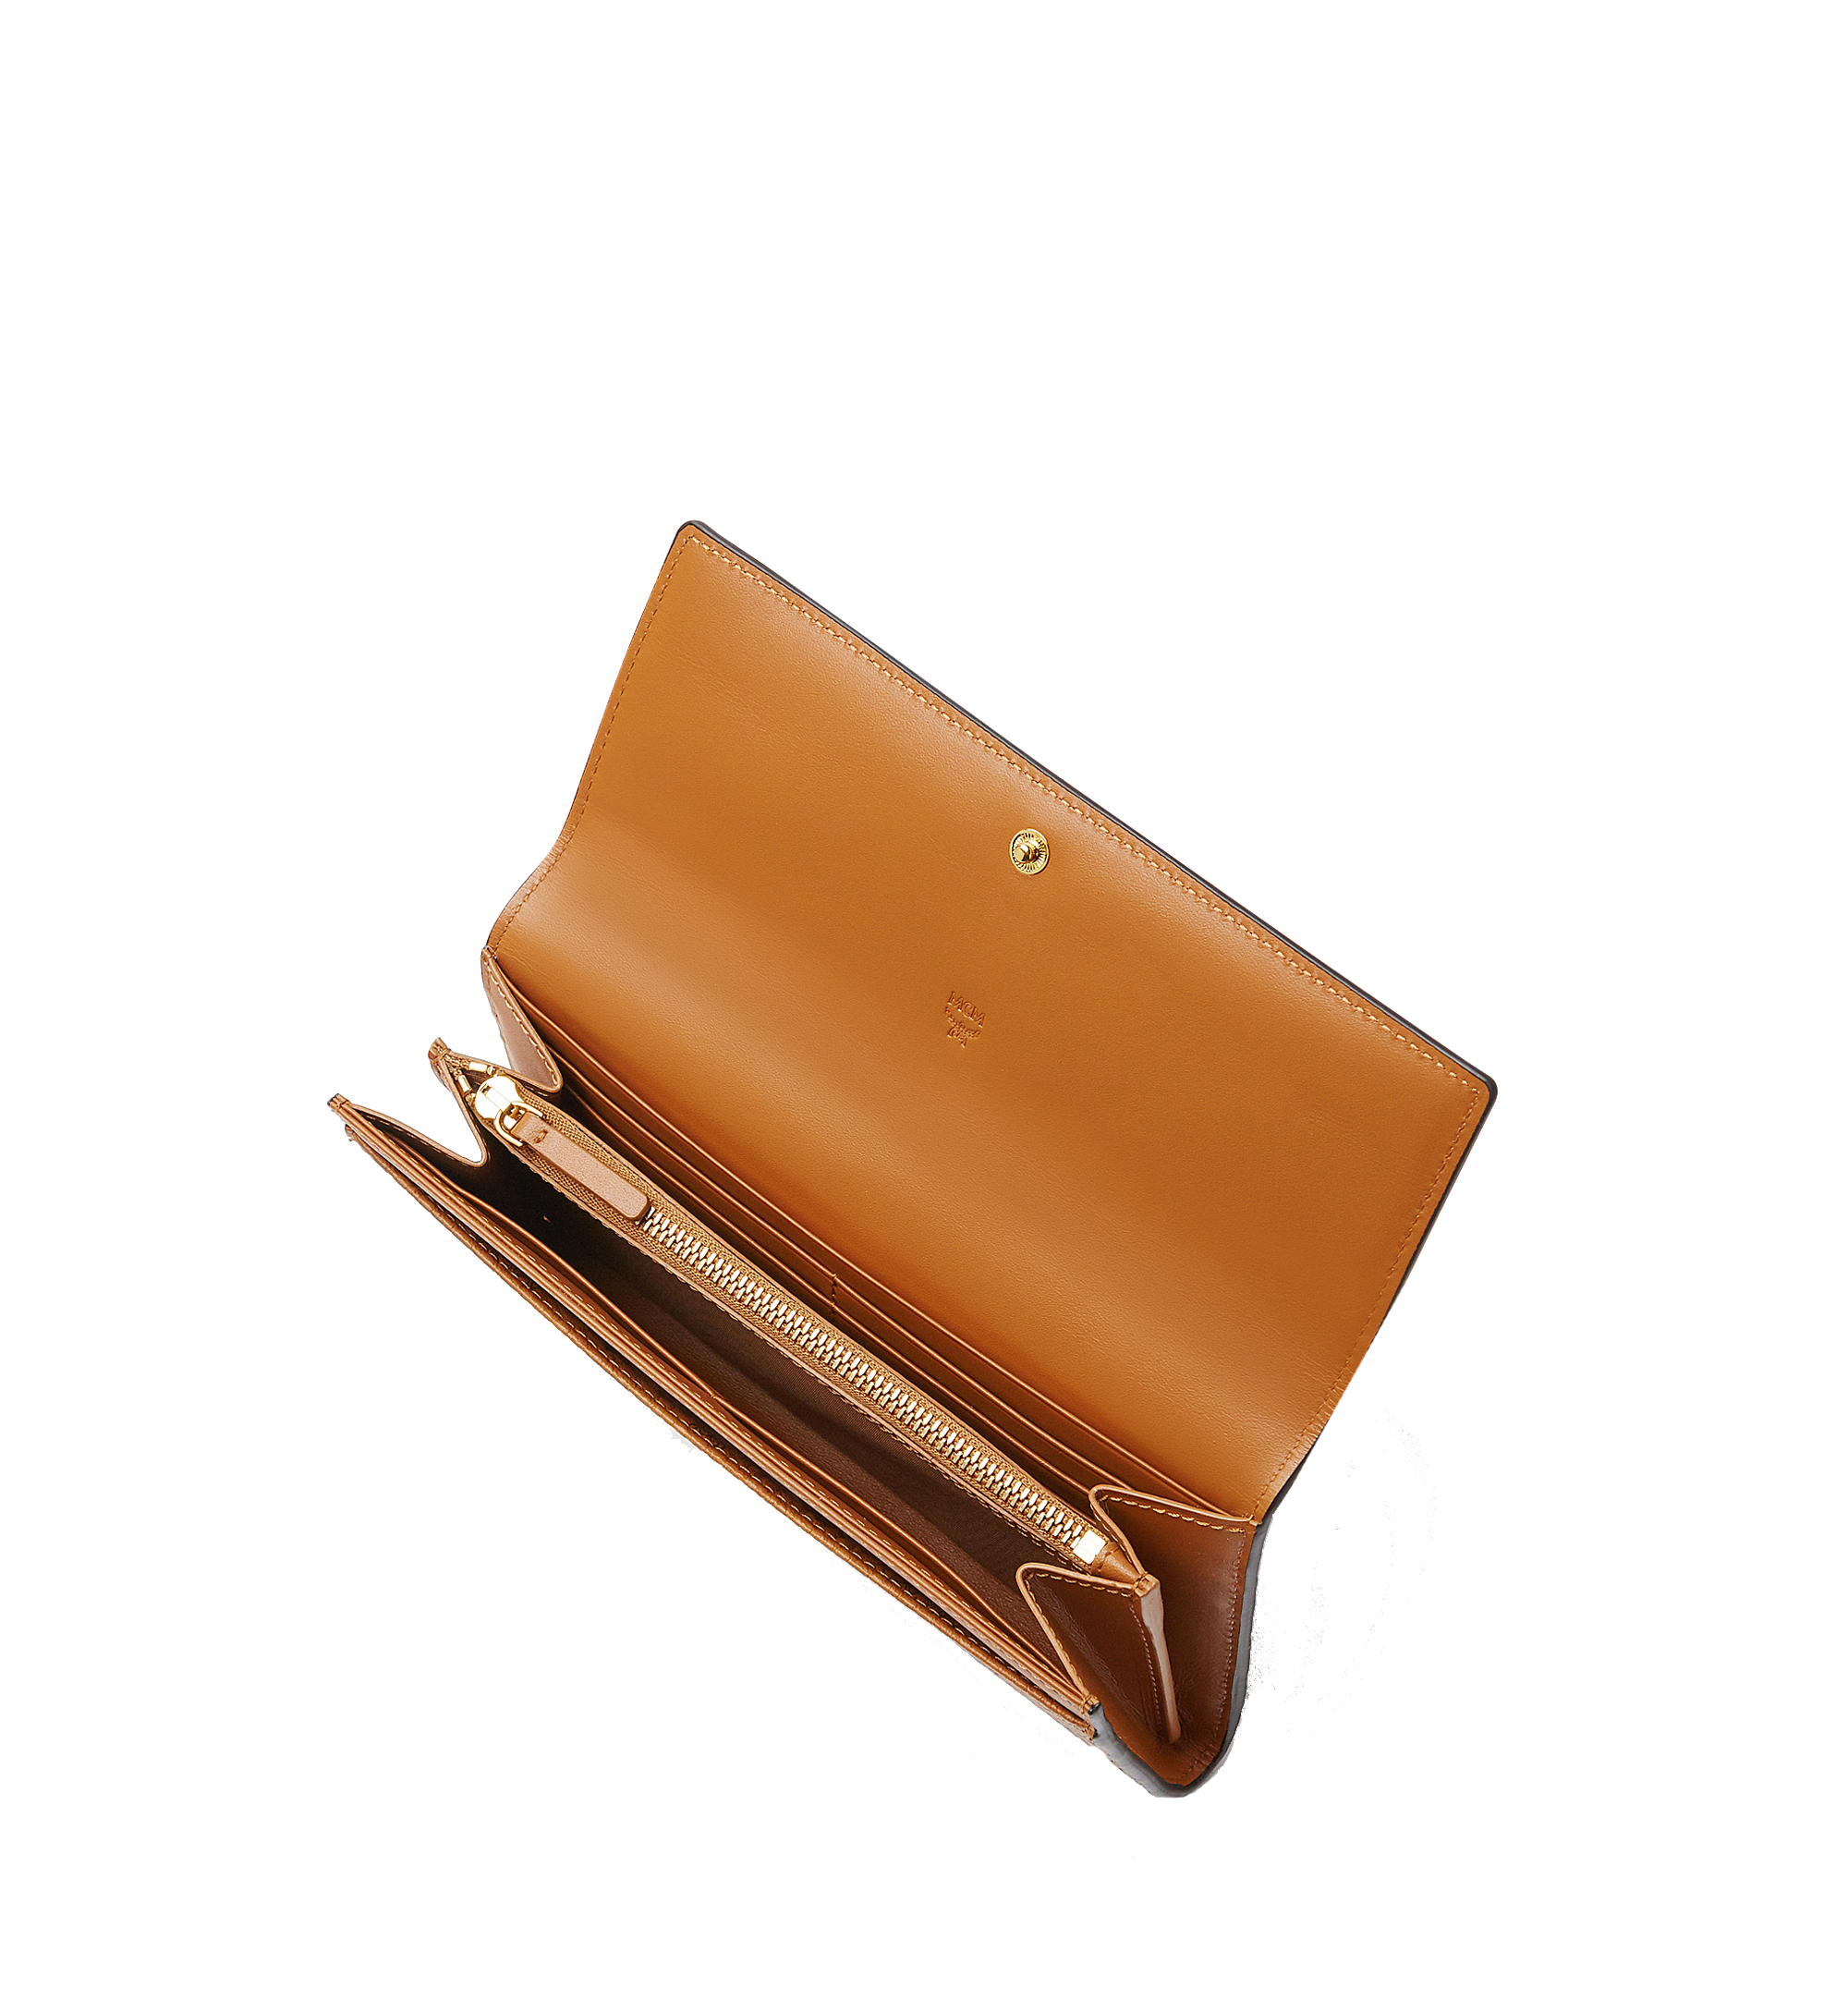 Mcm (Brown Bifold Wallet in Visetos Original)